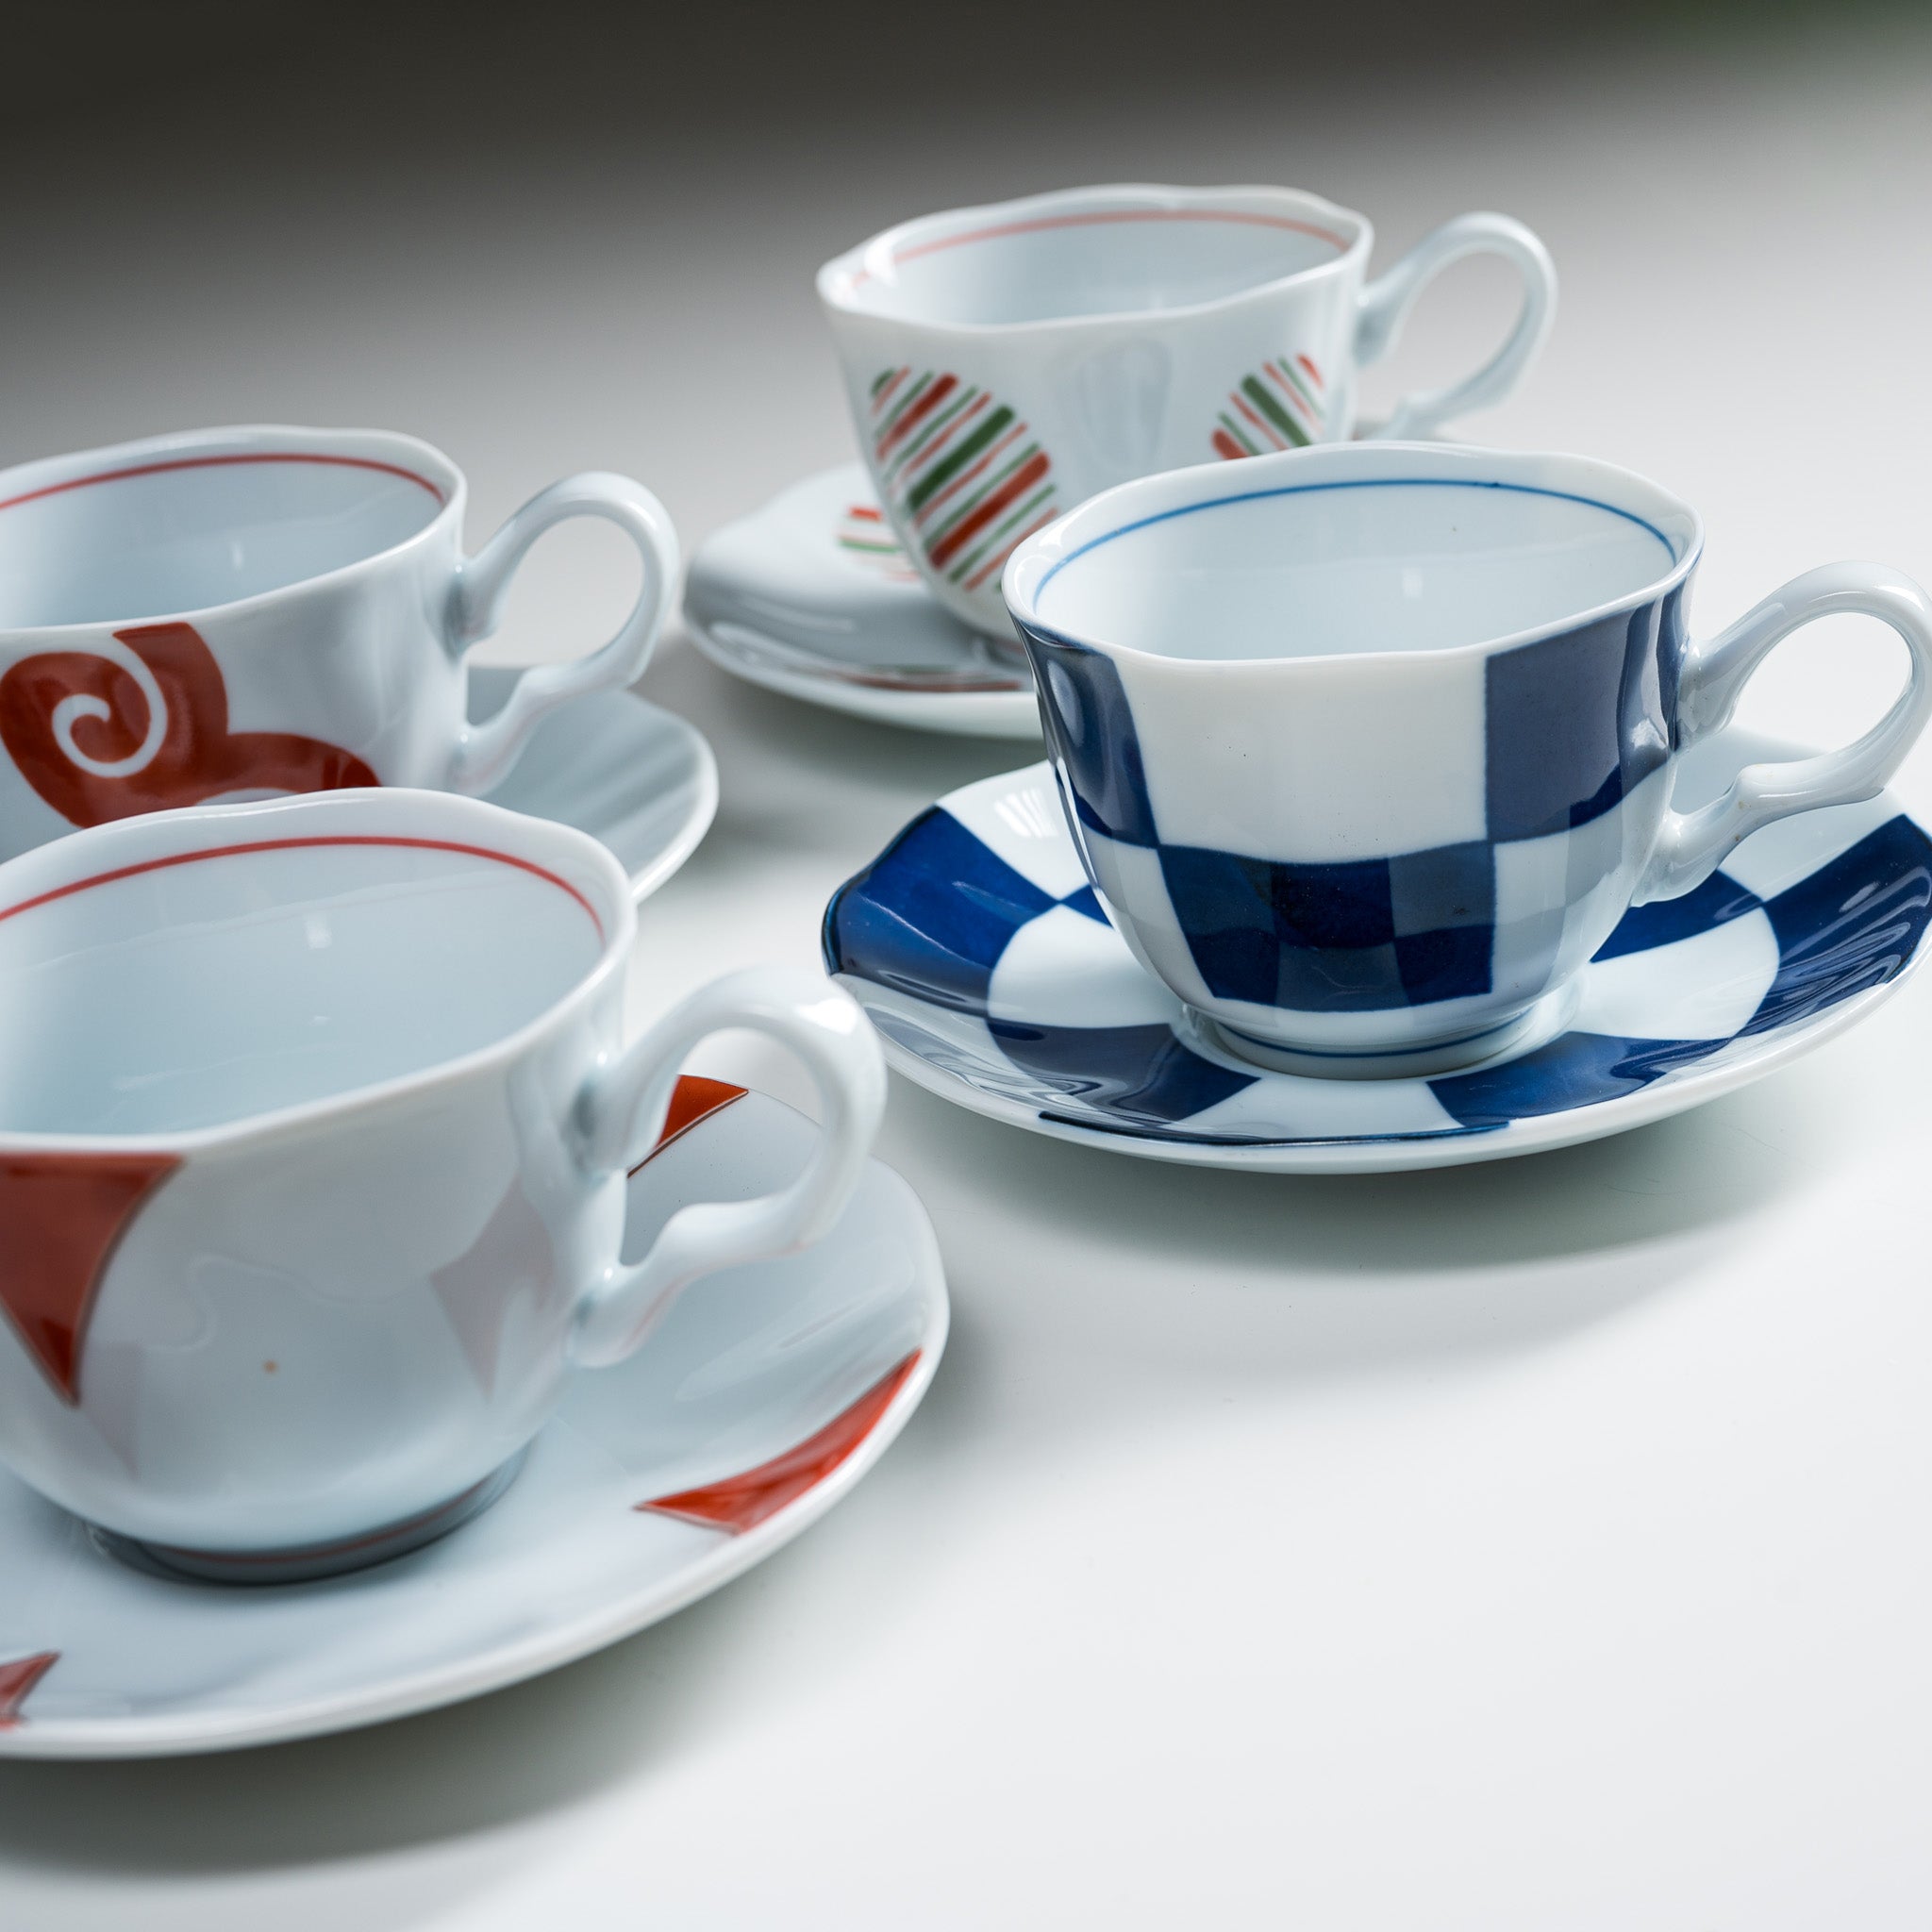 Hasami ware Tea Cup and Saucer Gift Set - Set of 5